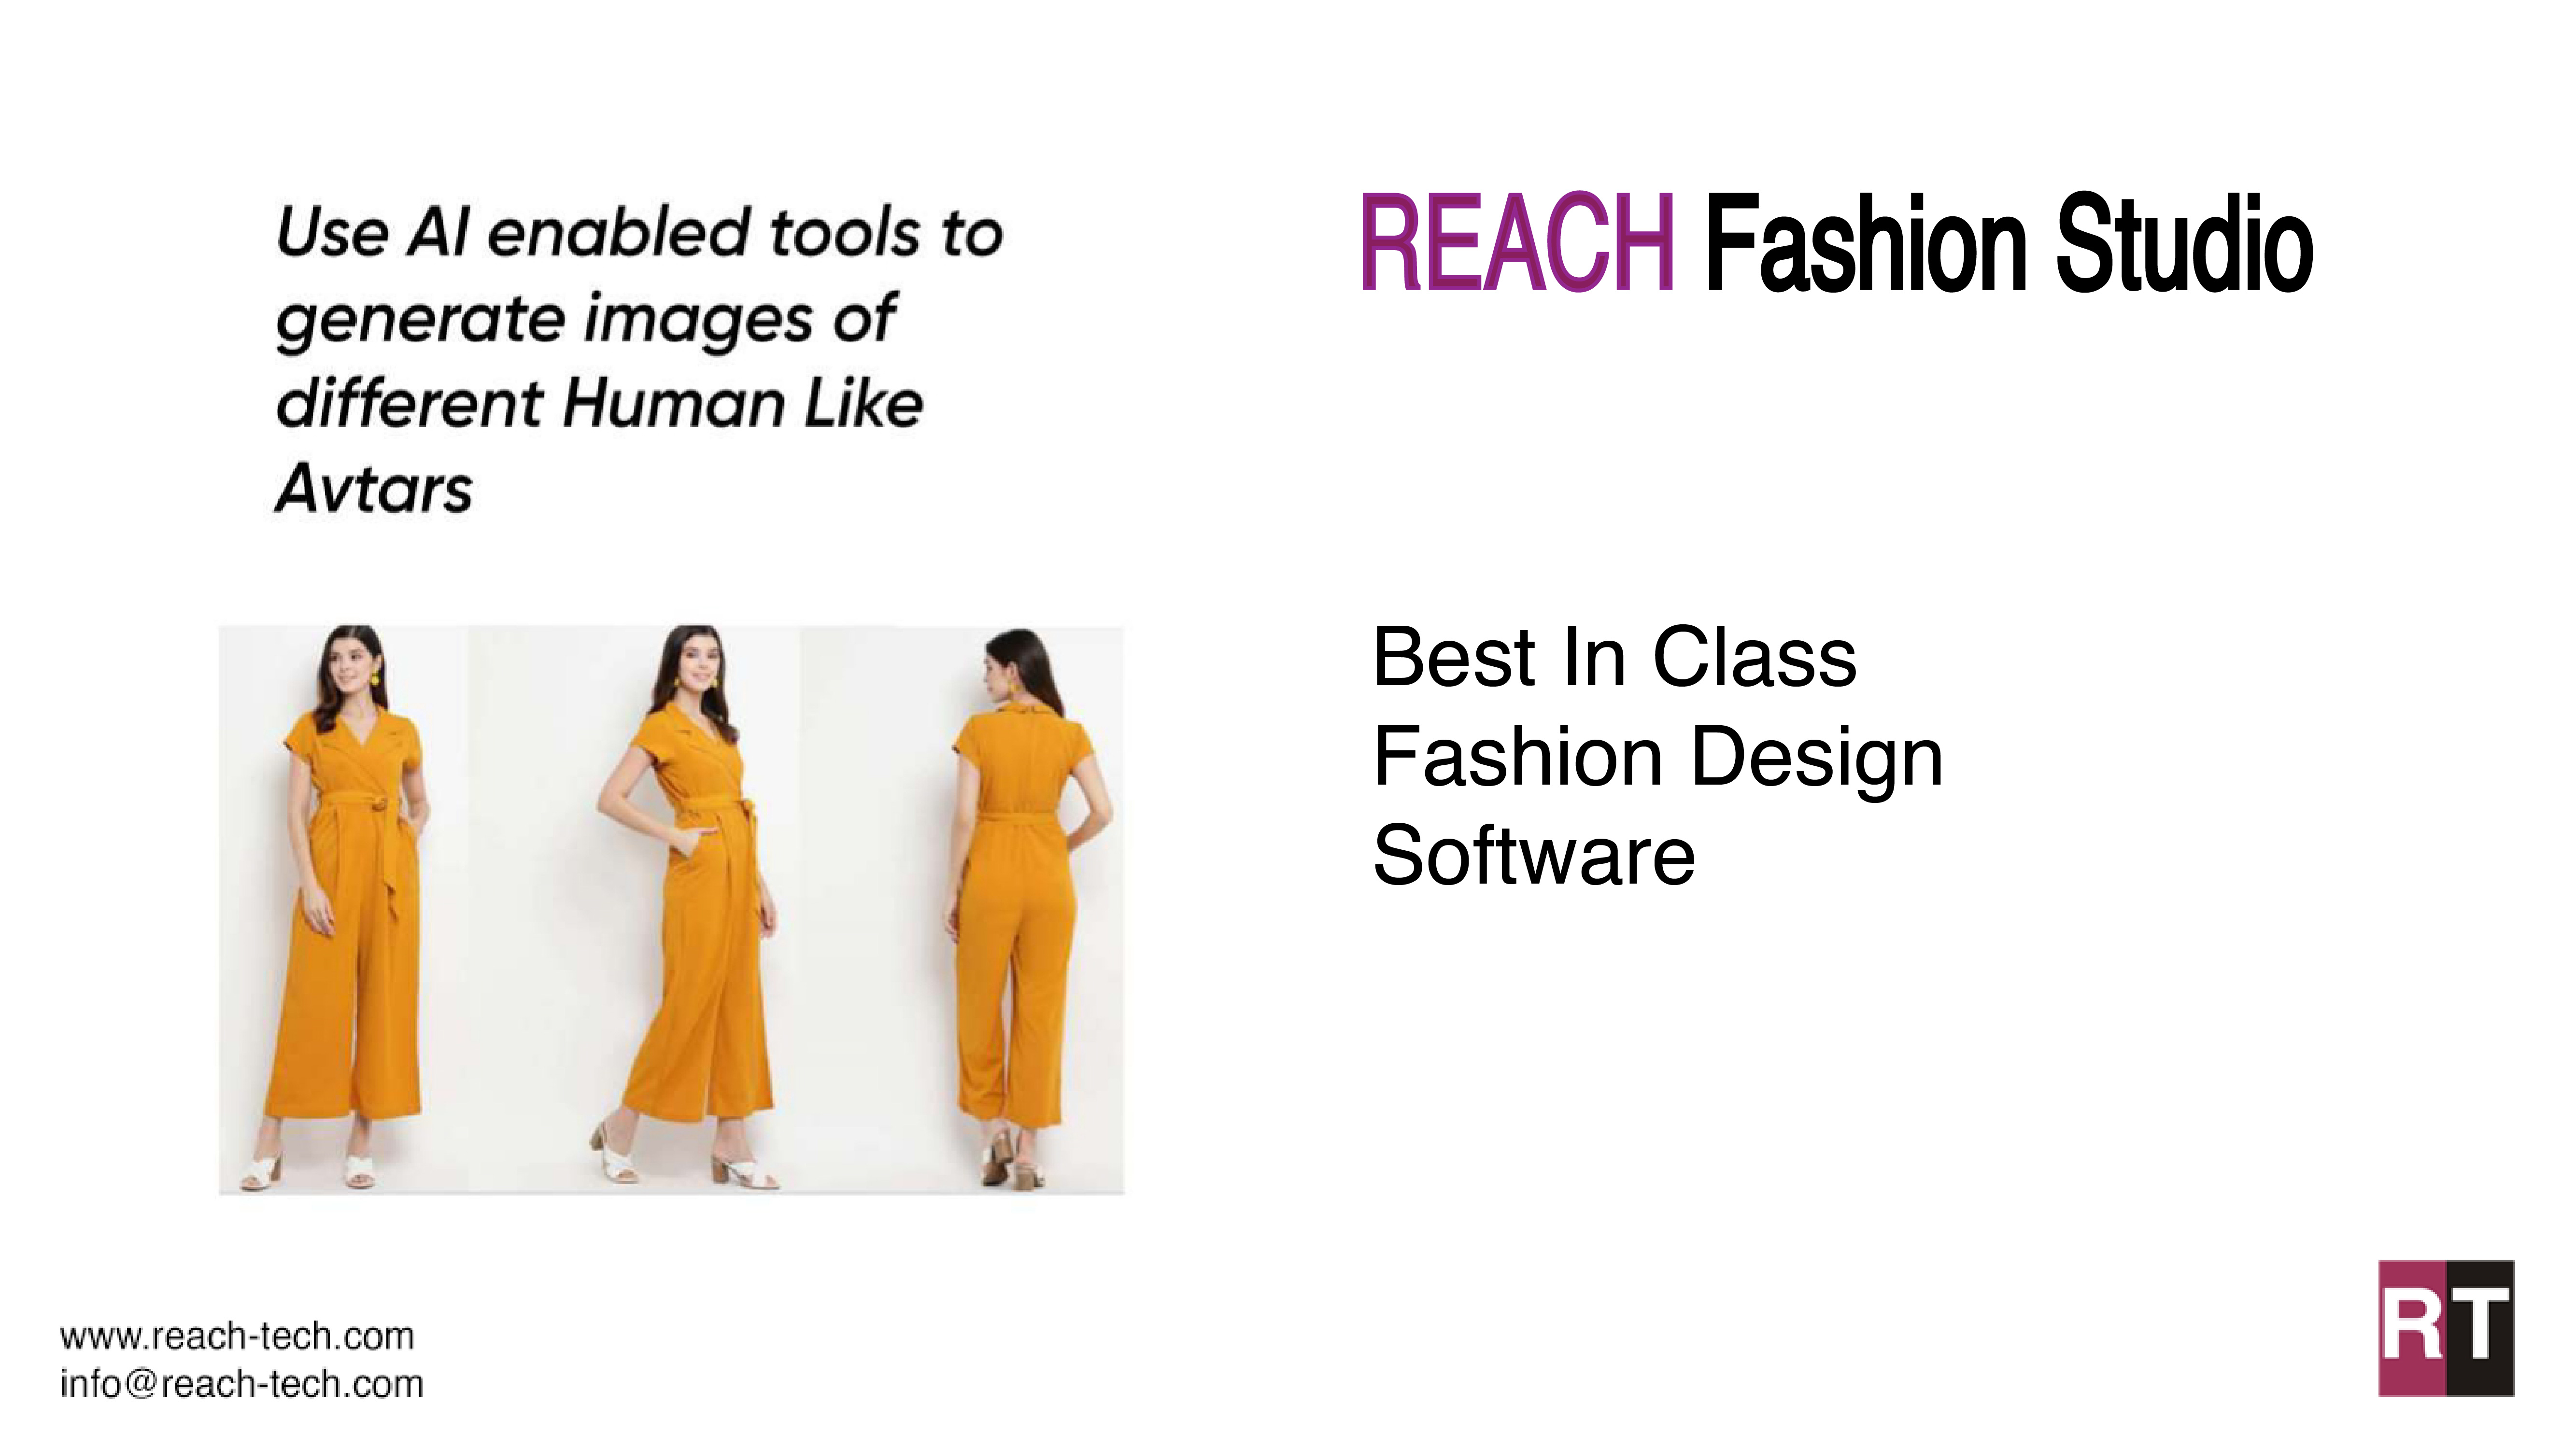 Reach Fashion Studio poster Image 05